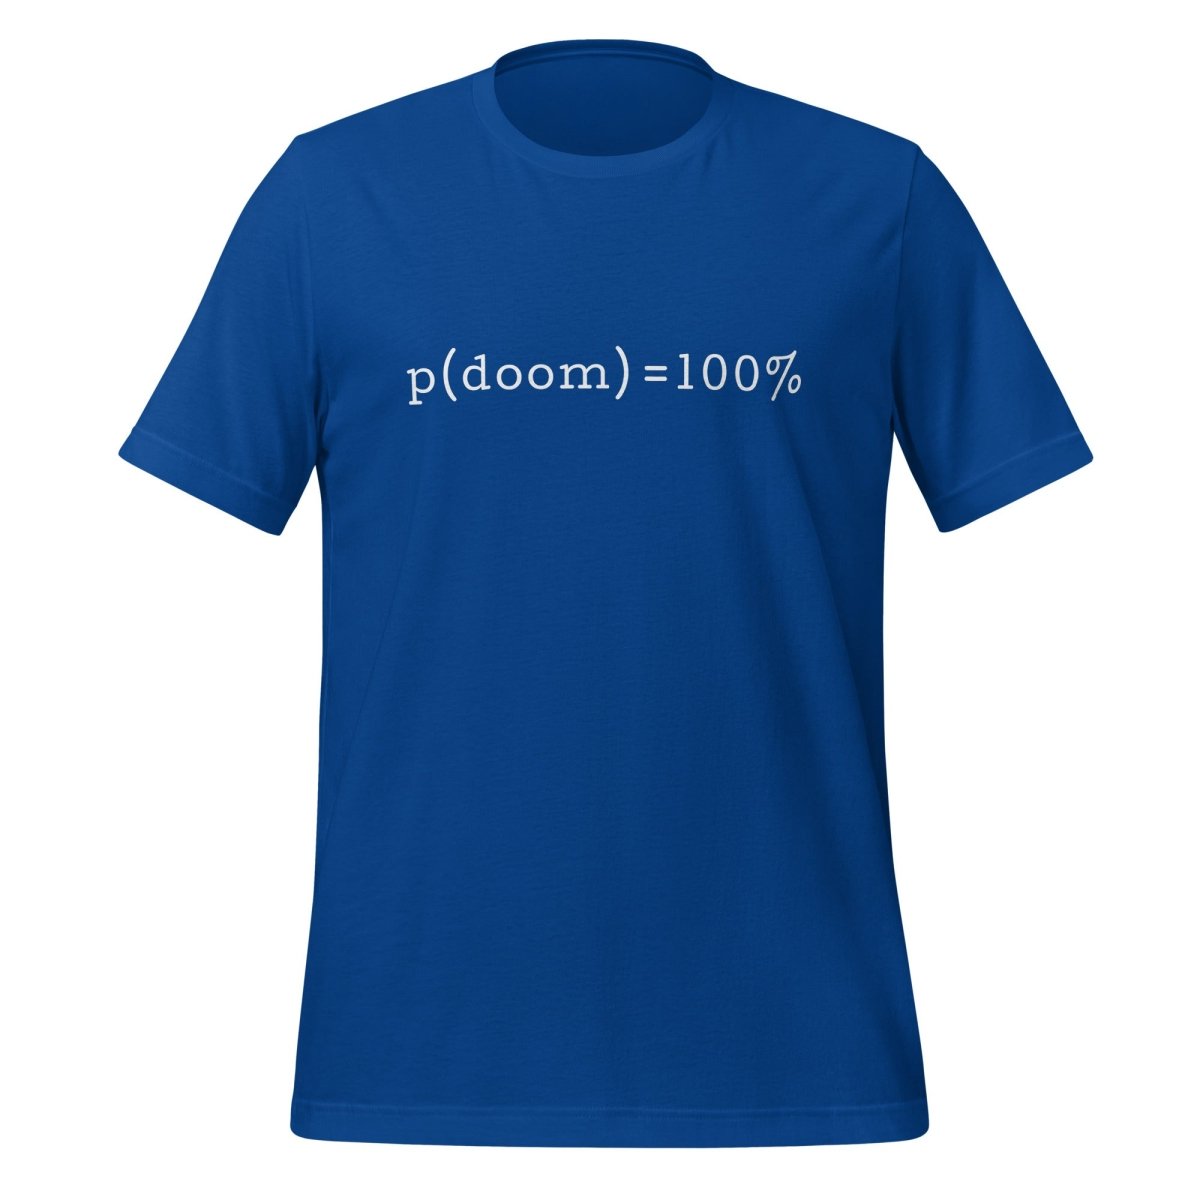 p(doom) = 100% T - Shirt (unisex) - True Royal - AI Store